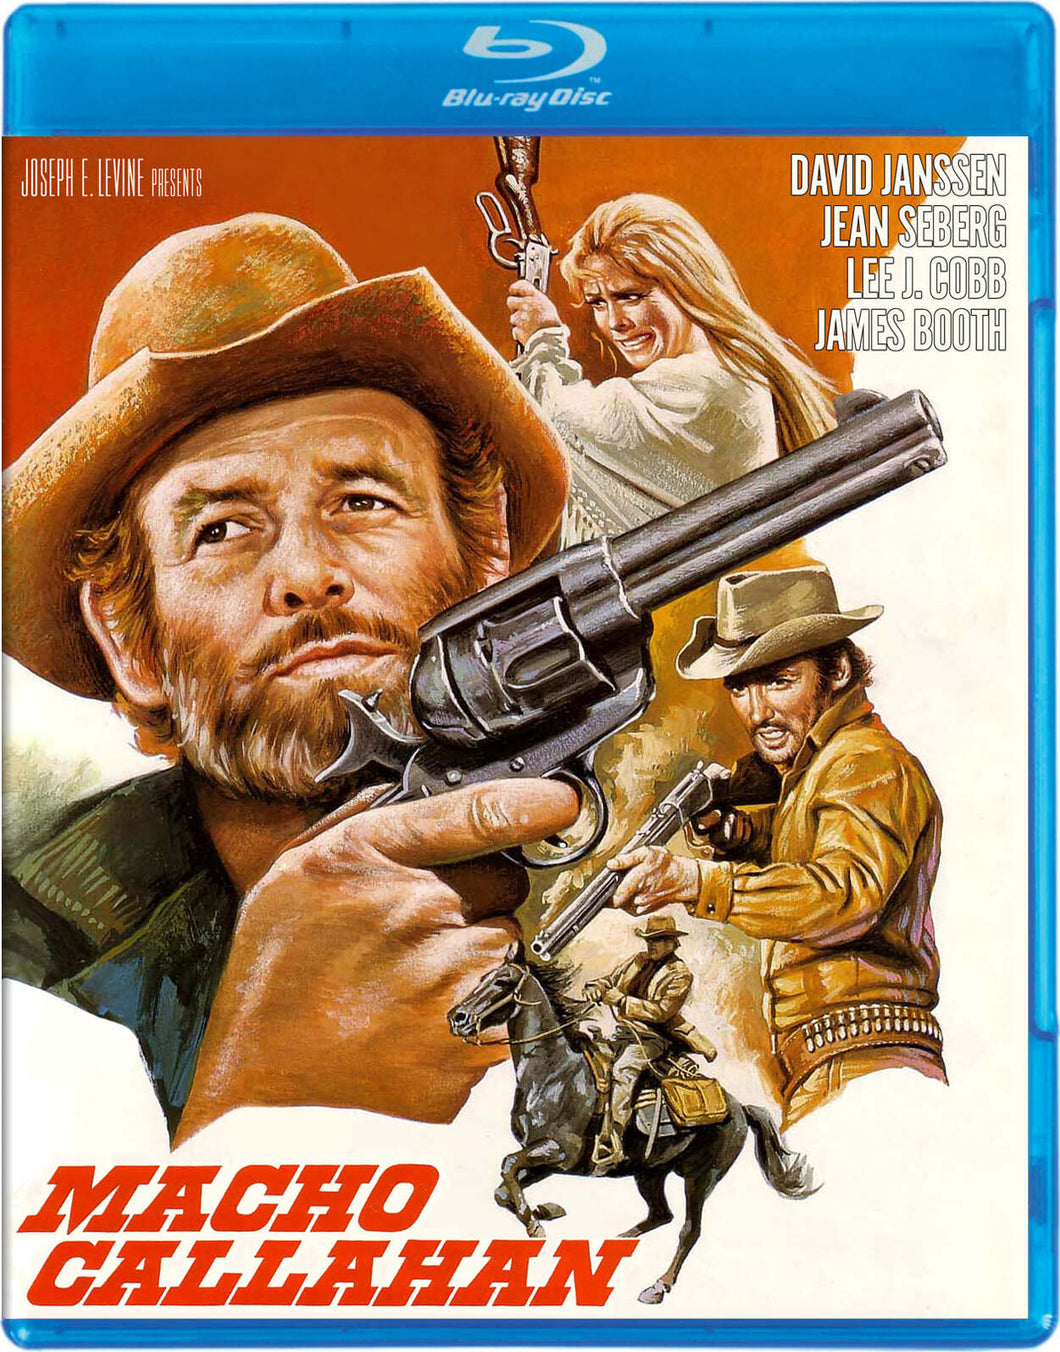 Macho Callahan (1970) de Bernard L. Kowalski - front cover